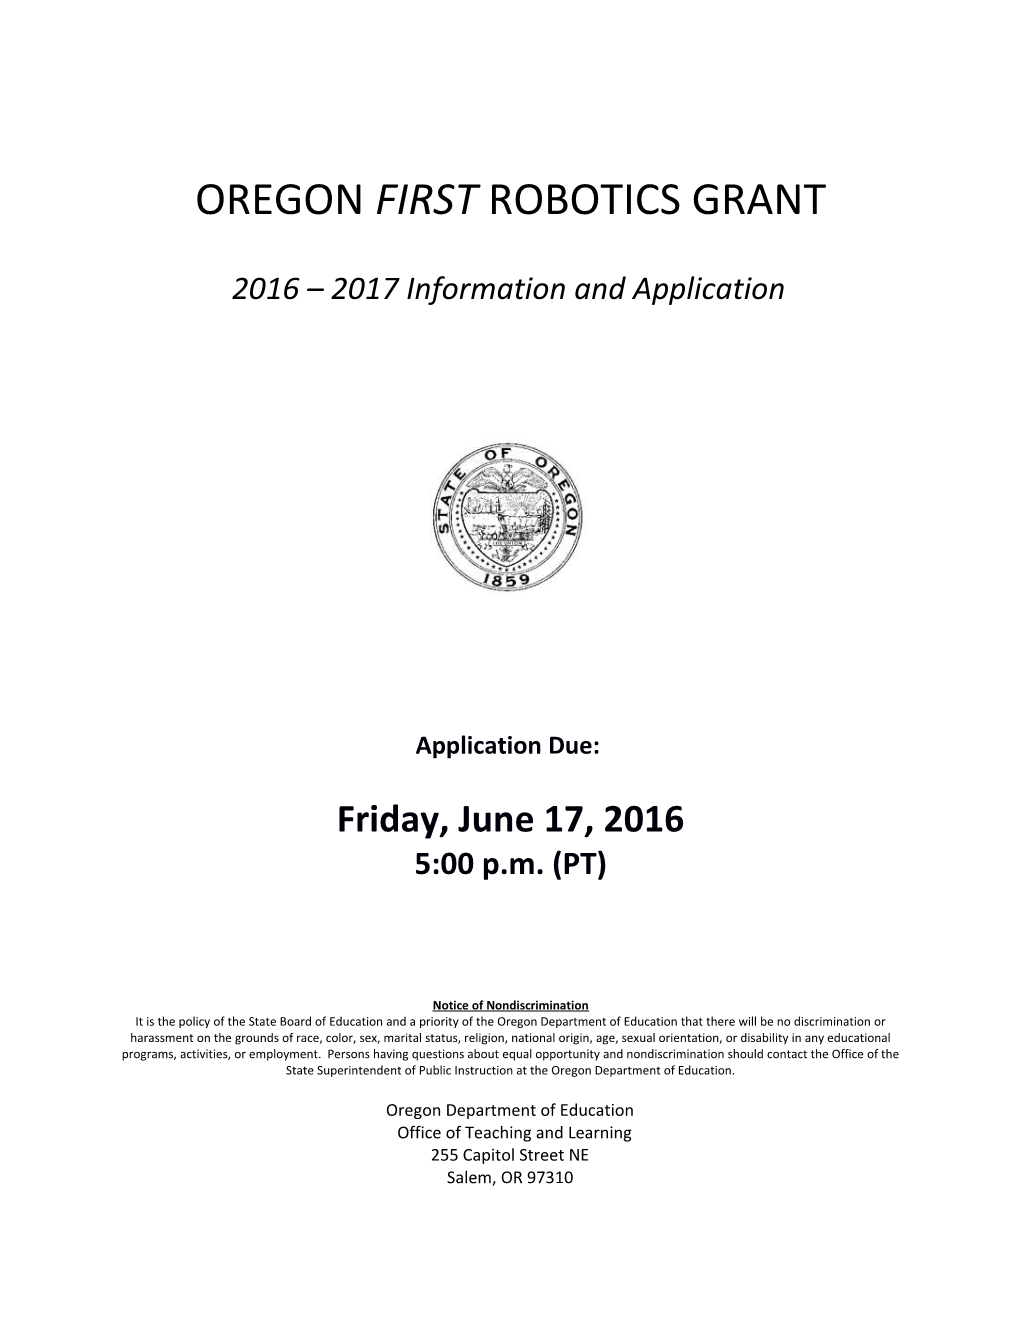 FIRST Robotics Grant RFP, 2016-17